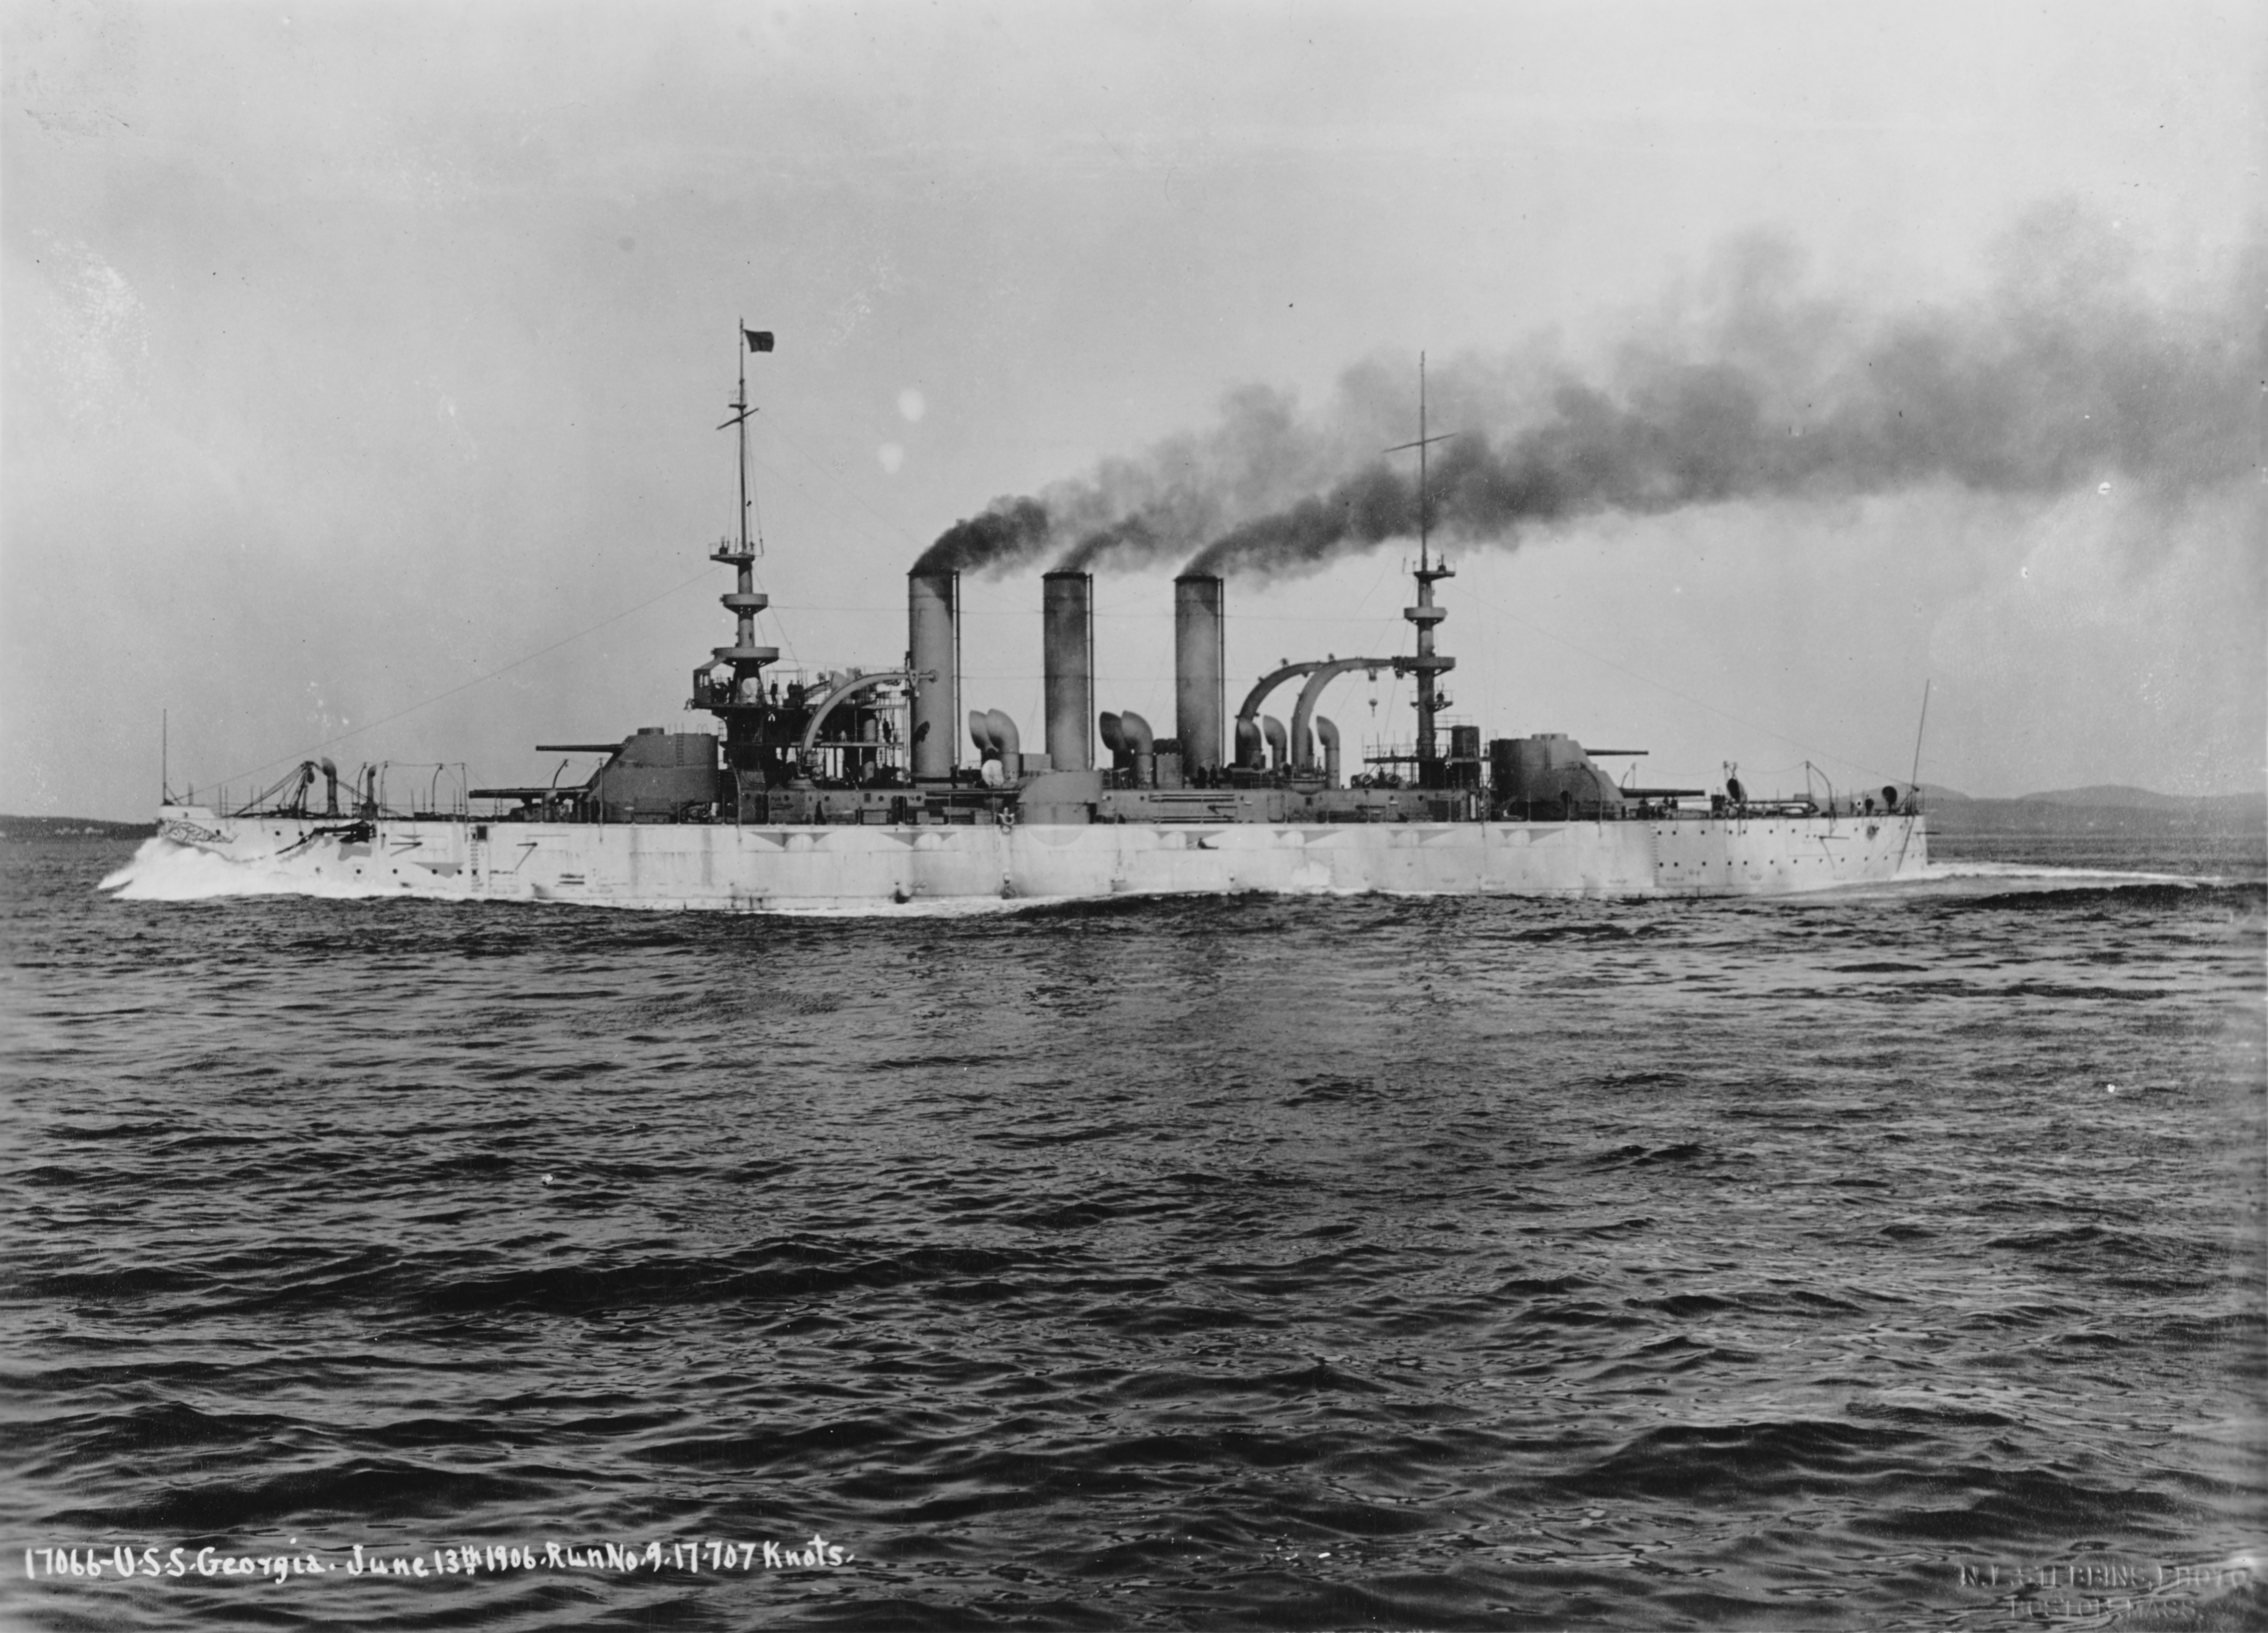 The USS Georgia